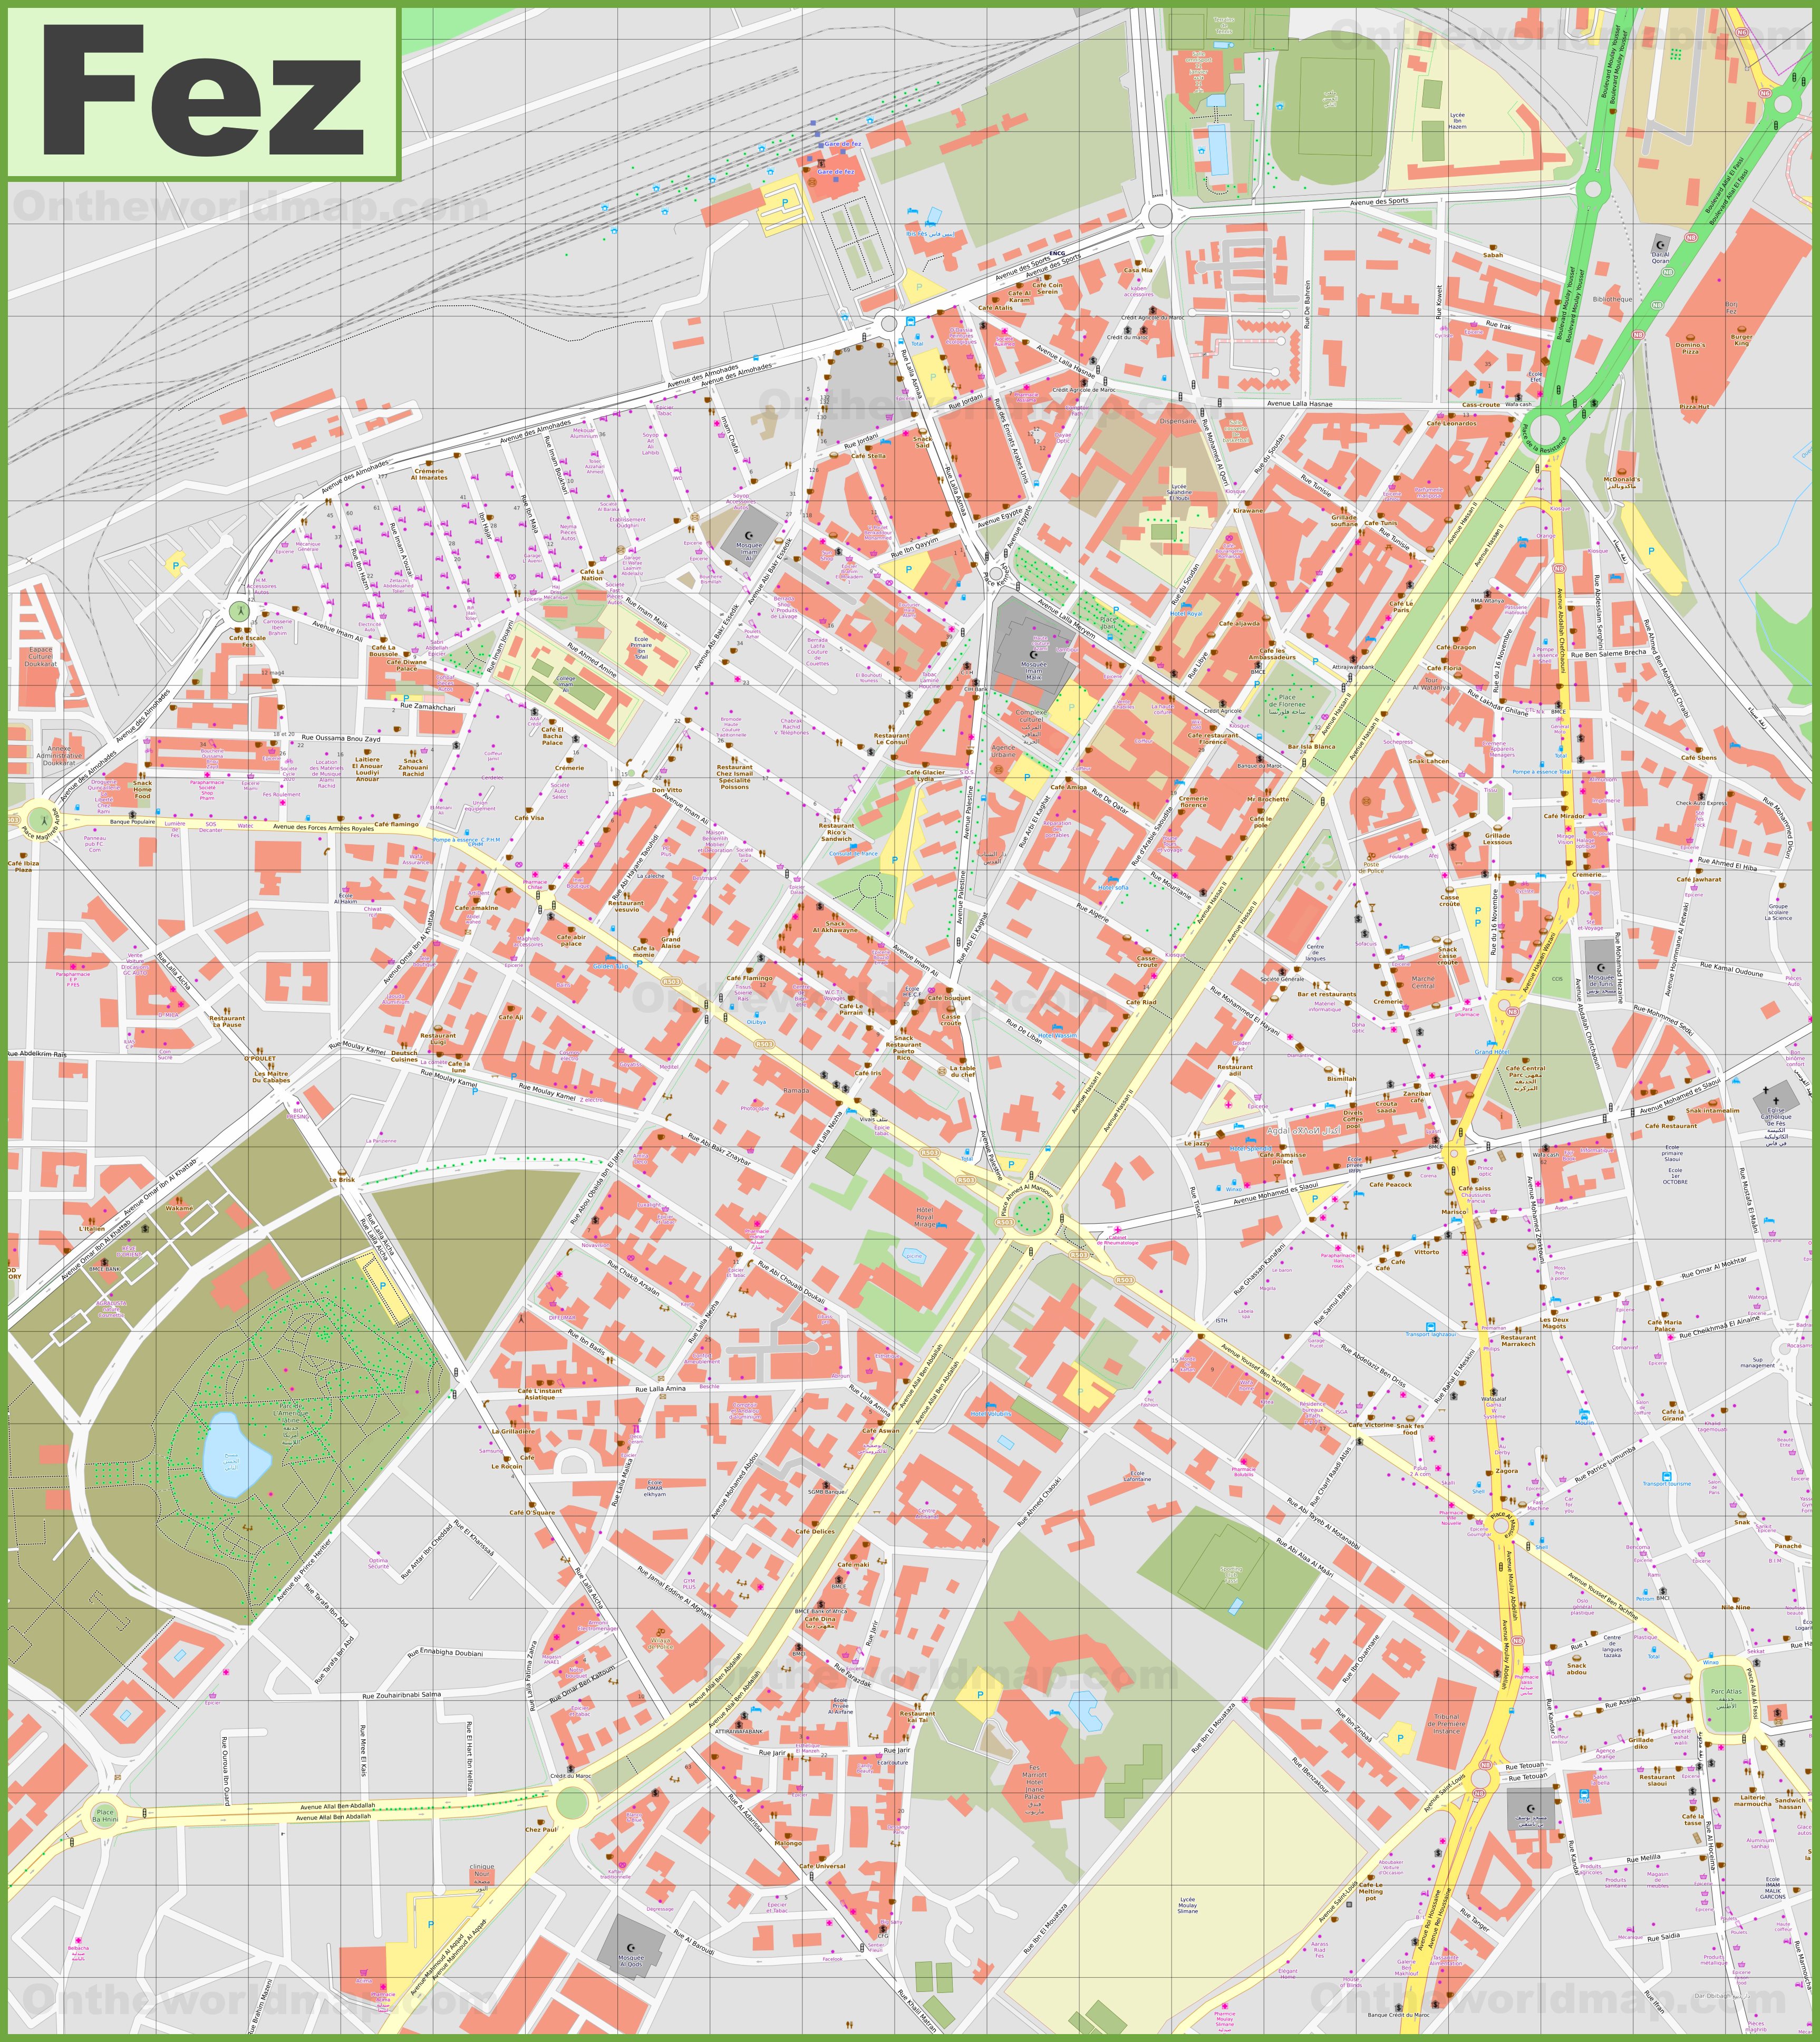 fez-city-center-map.jpg